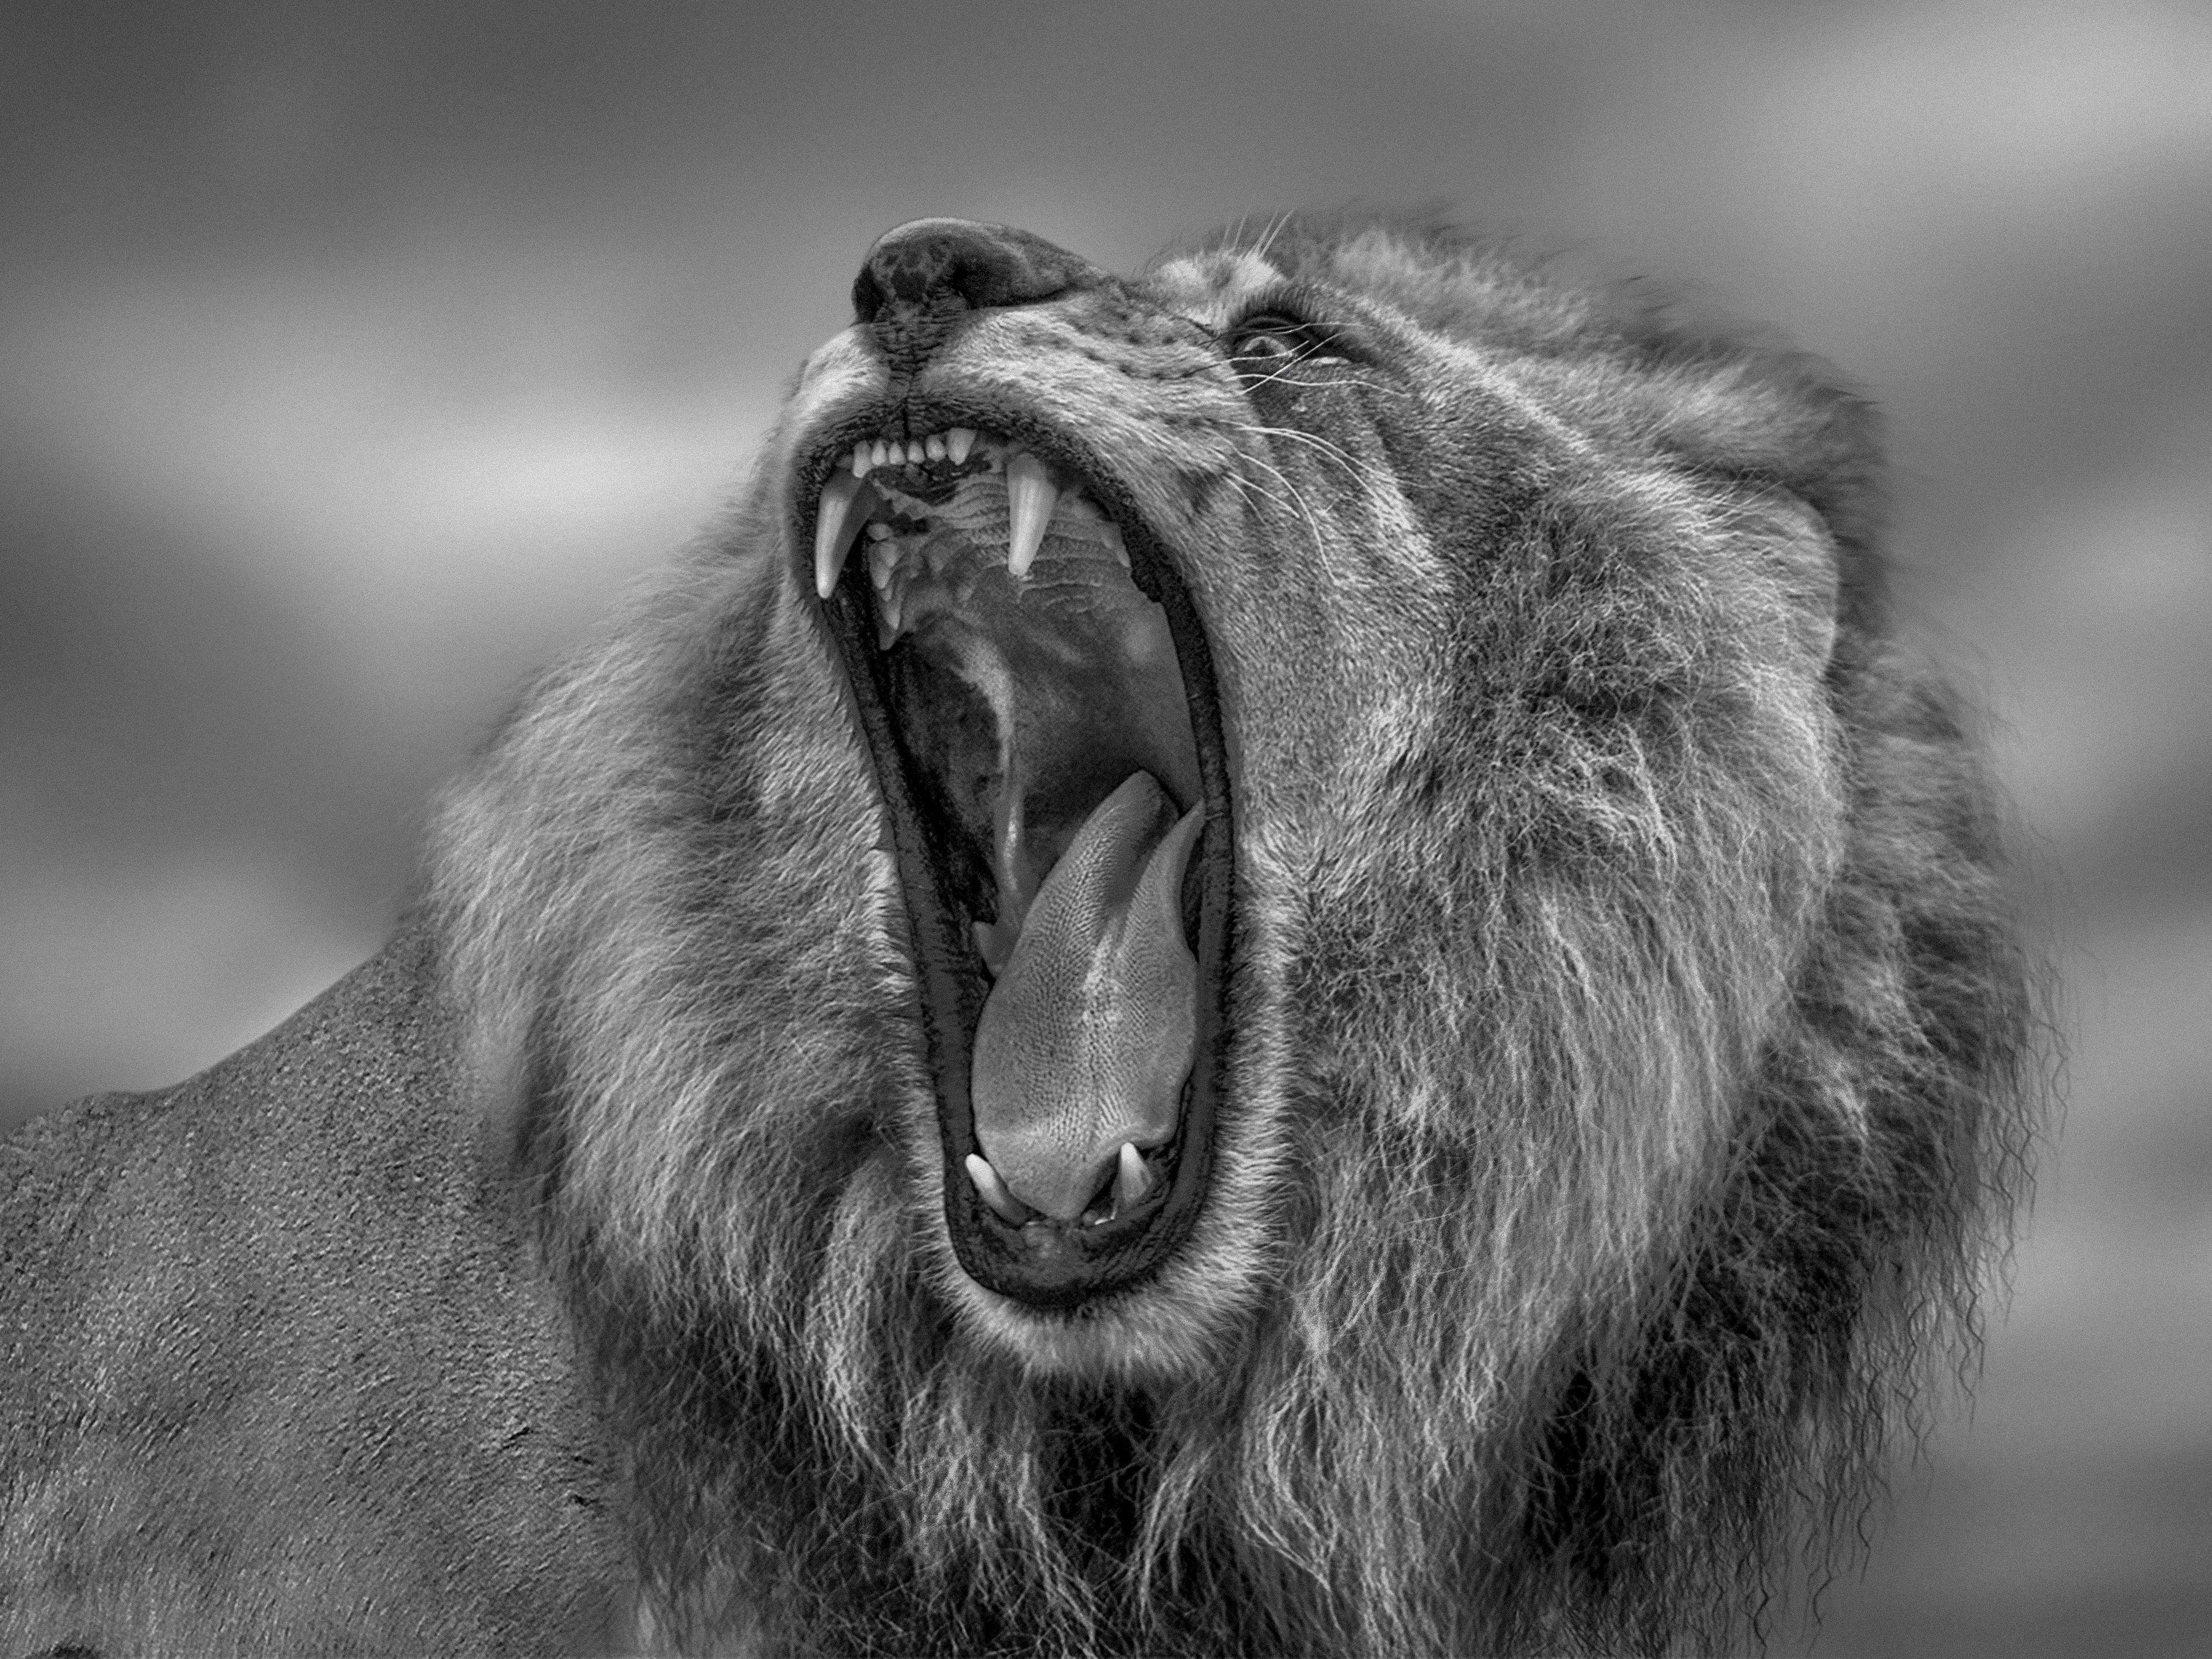 Shane Russeck Black and White Photograph - "Roar" - 40x60 Black and White Lion Photography  Africa African Lion Photograph